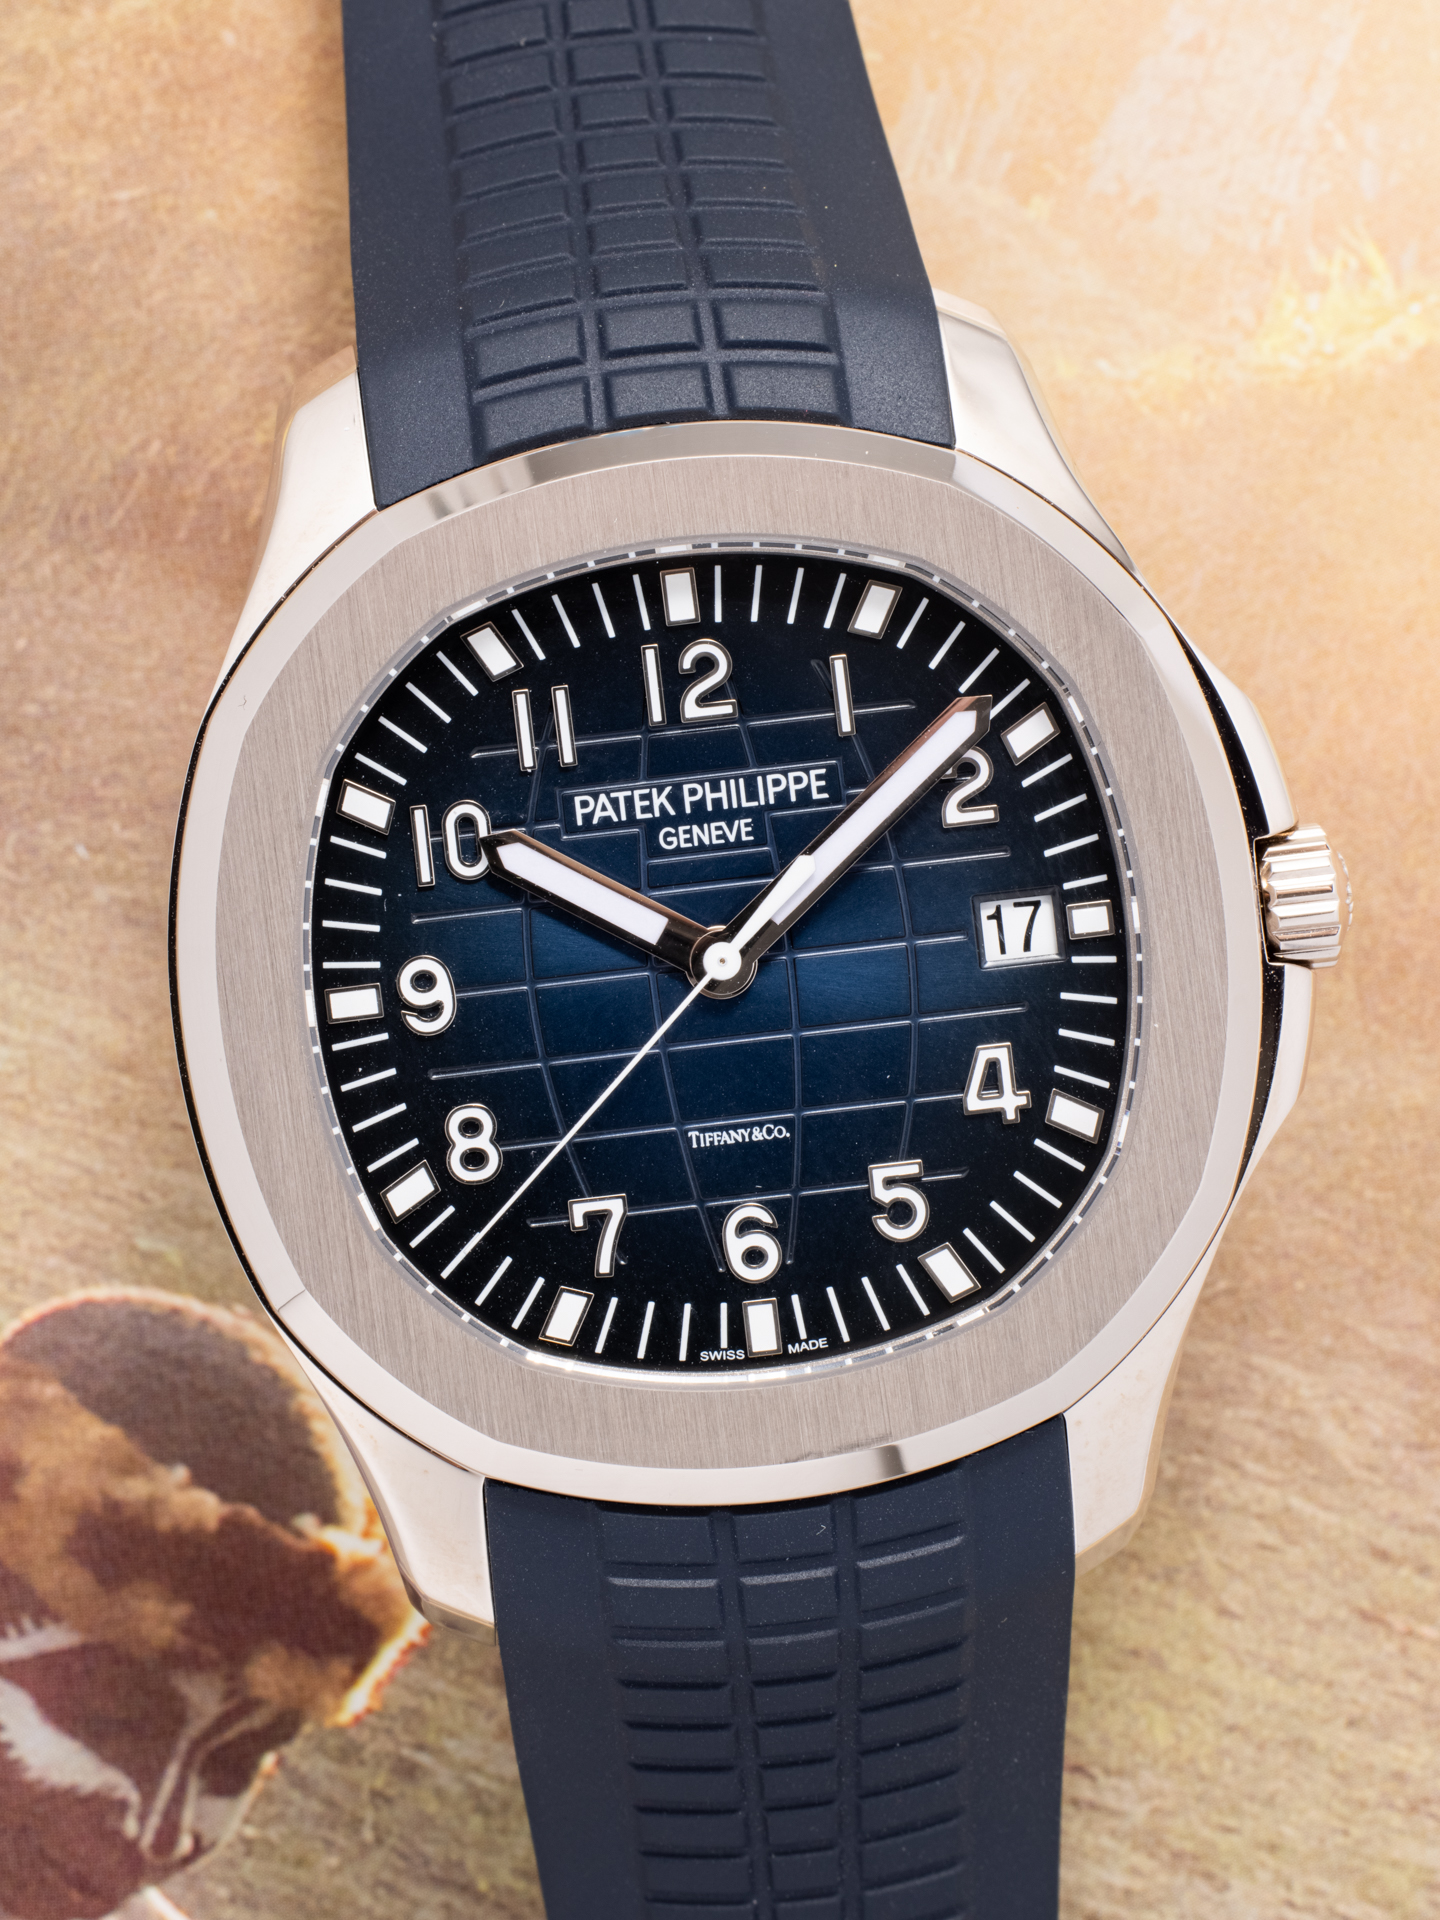 Patek Nautilus Tiffany Stamp] : r/Watches